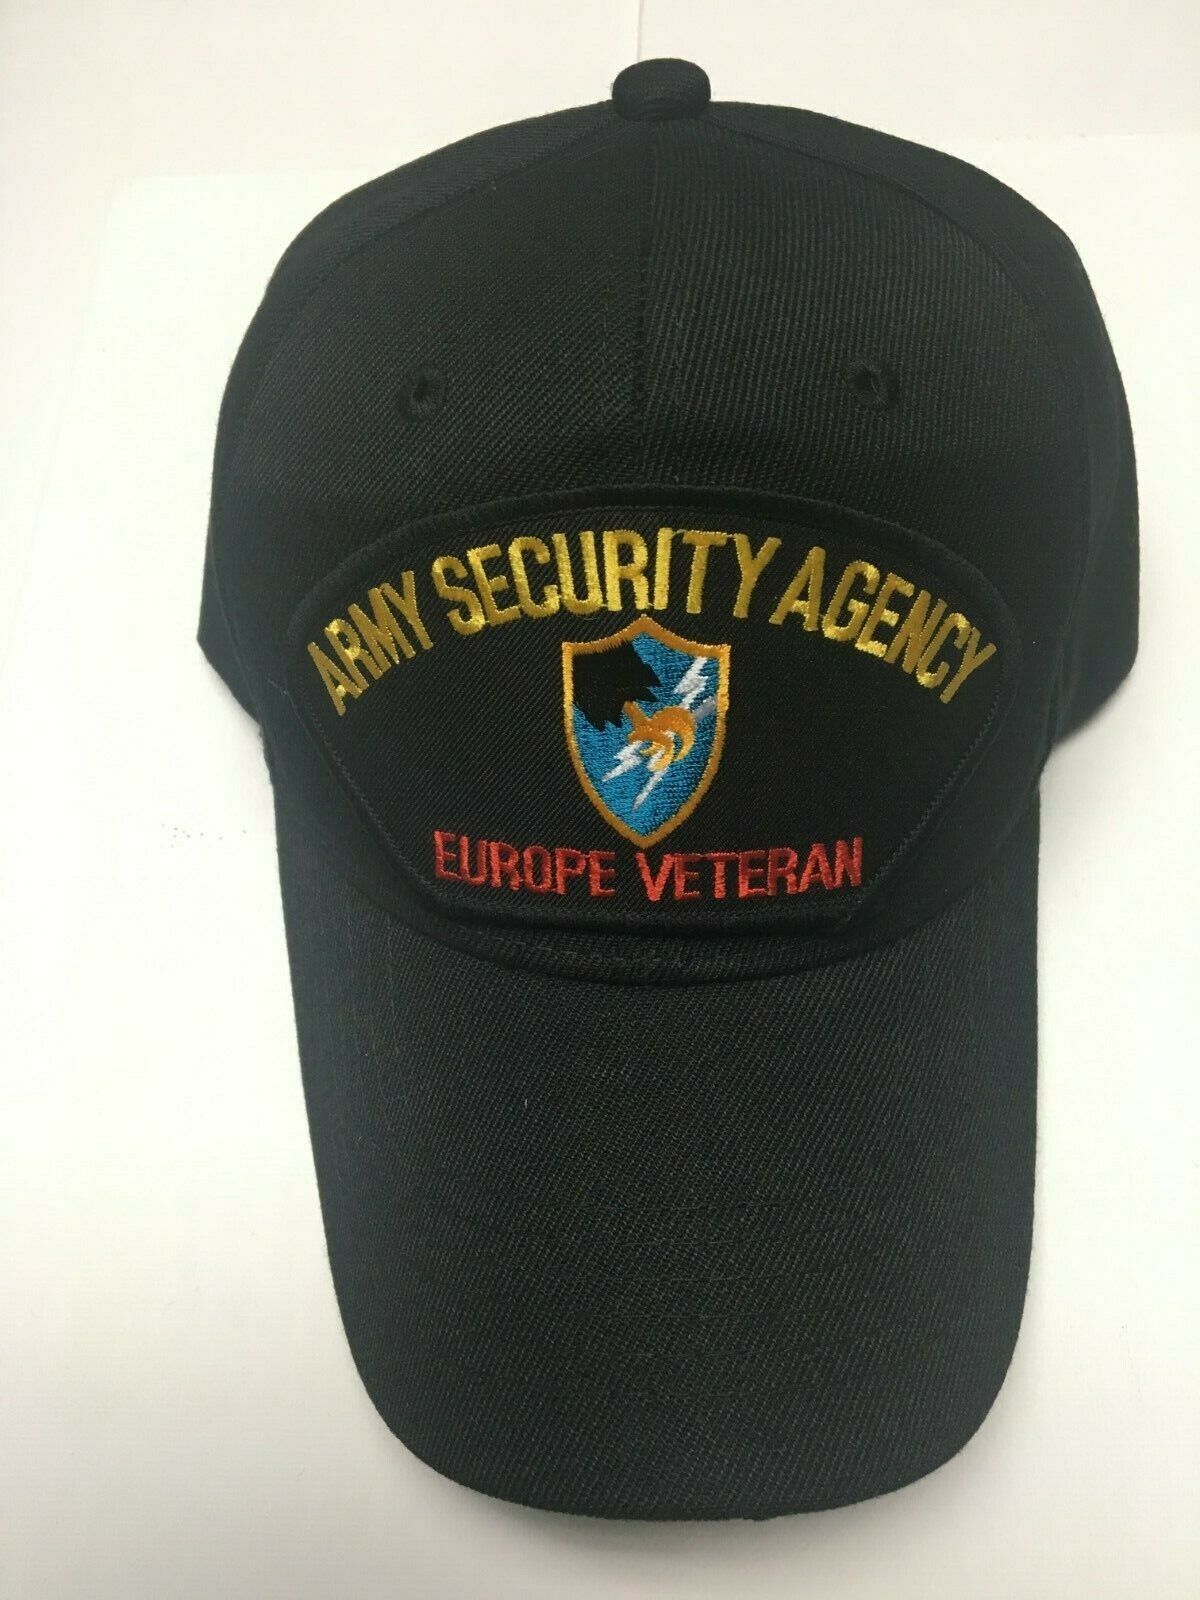 US ARMY SECURITY AGENCY EUROPE VETERAN MILITARY HAT/CAP